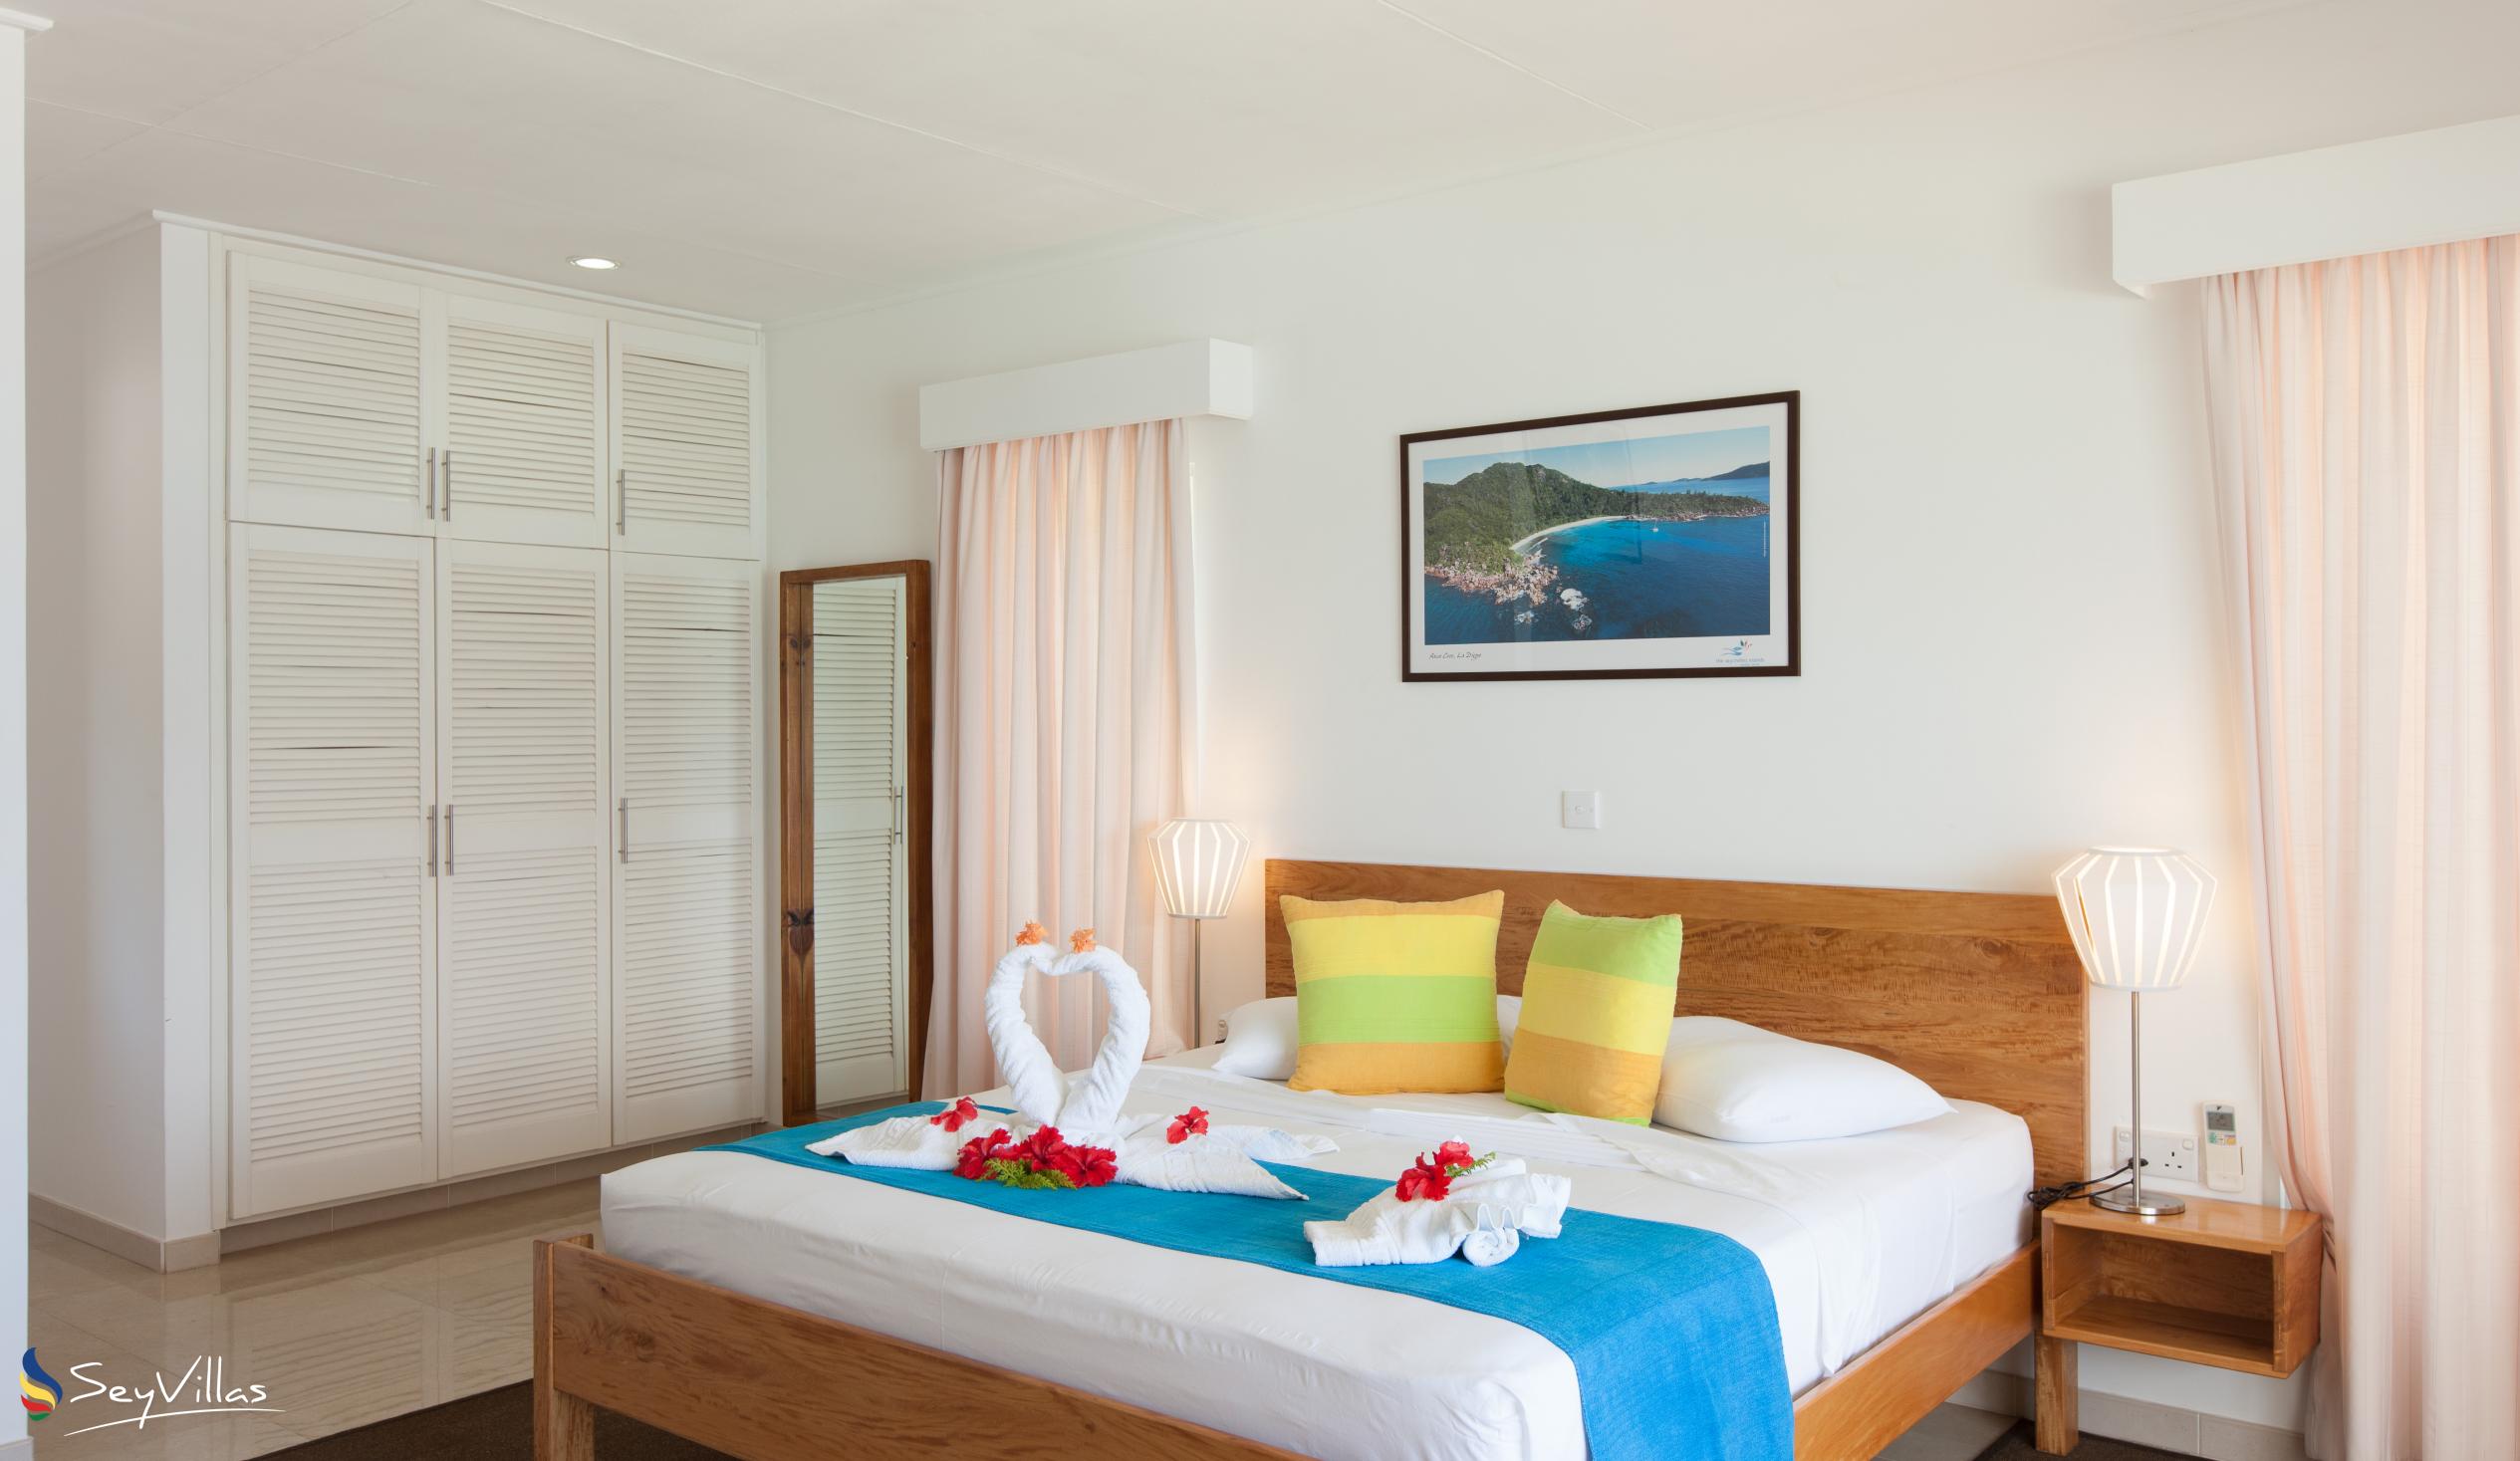 Photo 36: Marie-France Beach Front Apartments - Standard Room - La Digue (Seychelles)